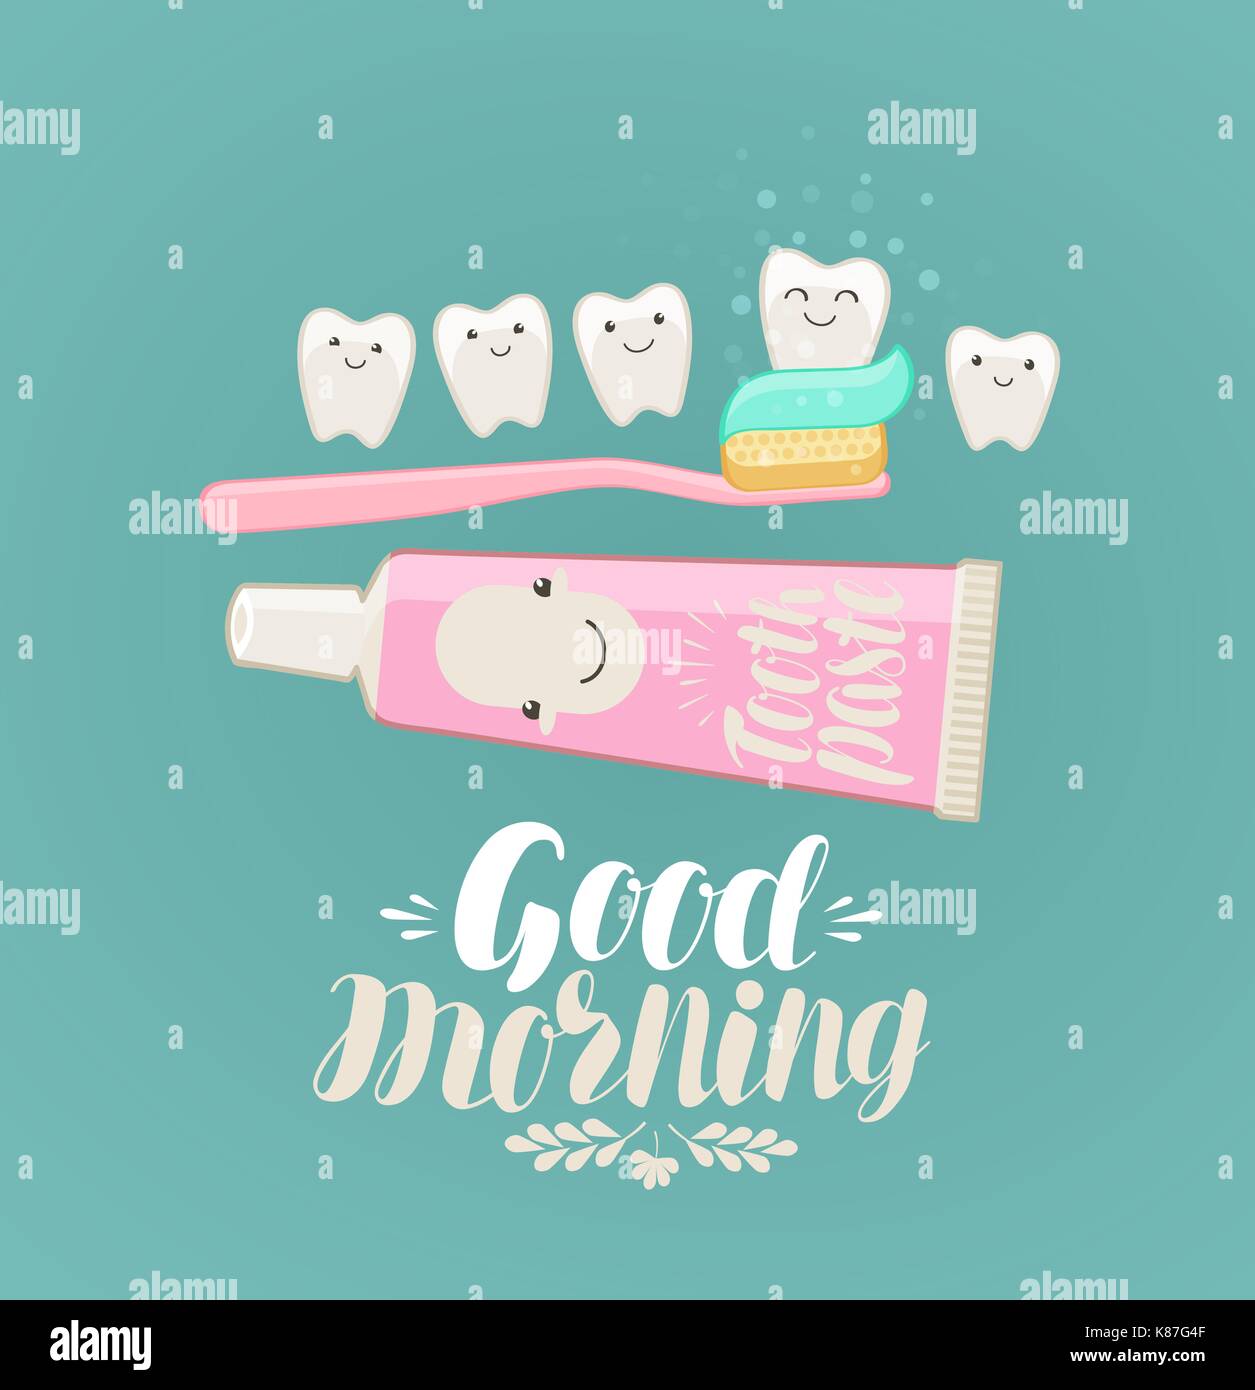 Good morning banner. Brushing Teeth, hygiene, toothpaste, toothbrush concept. Cartoon vector illustration Stock Vector